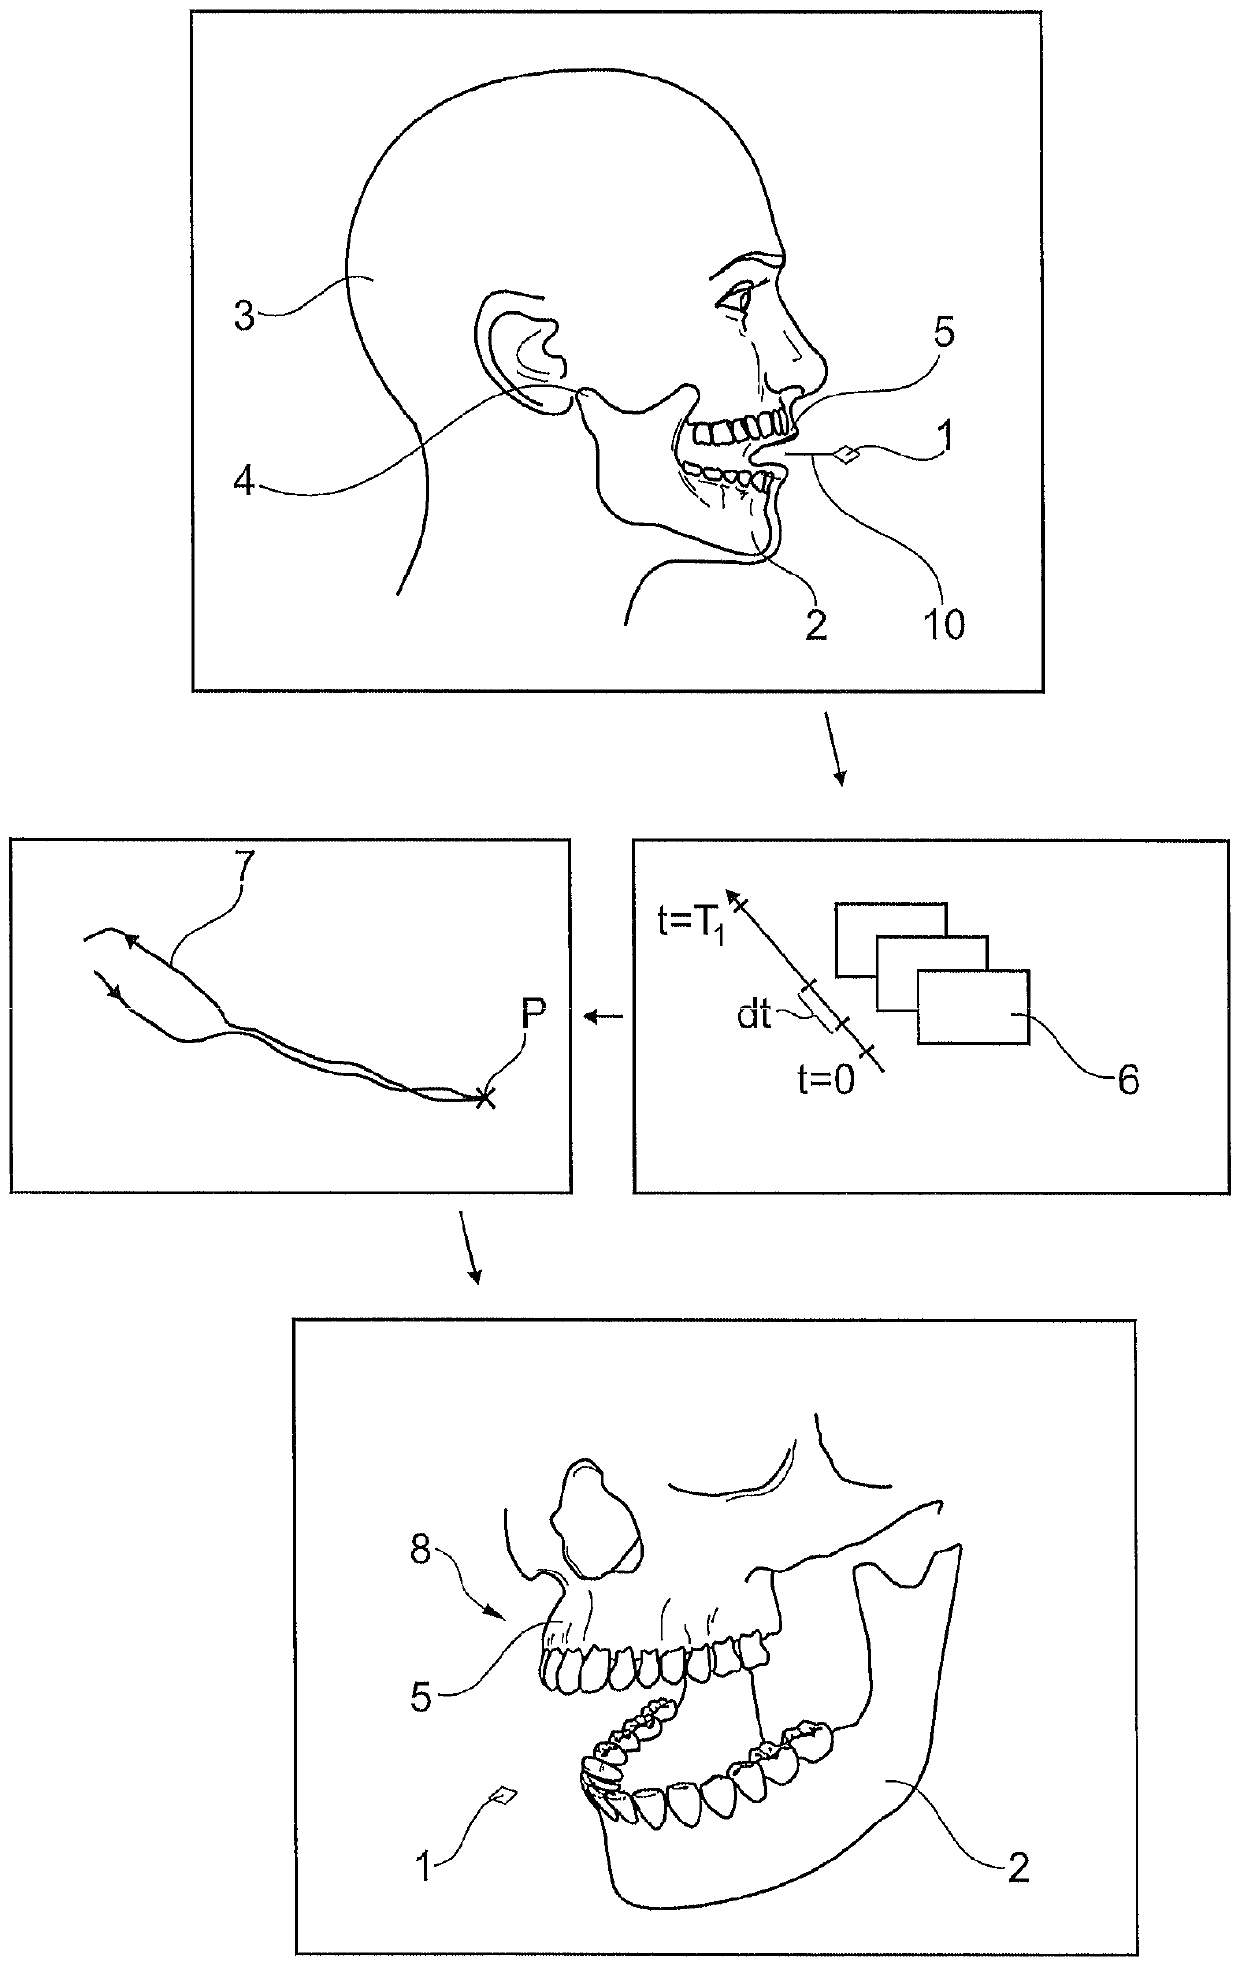 Method for detecting the movement of a temporomandibular joint